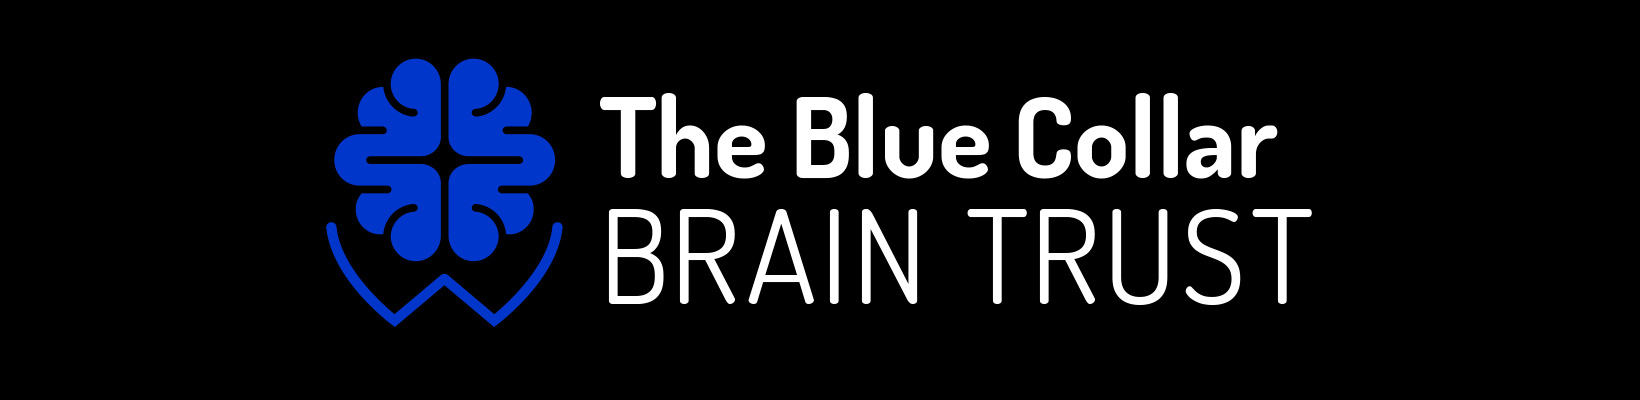 The Blue Collar Brain Trust